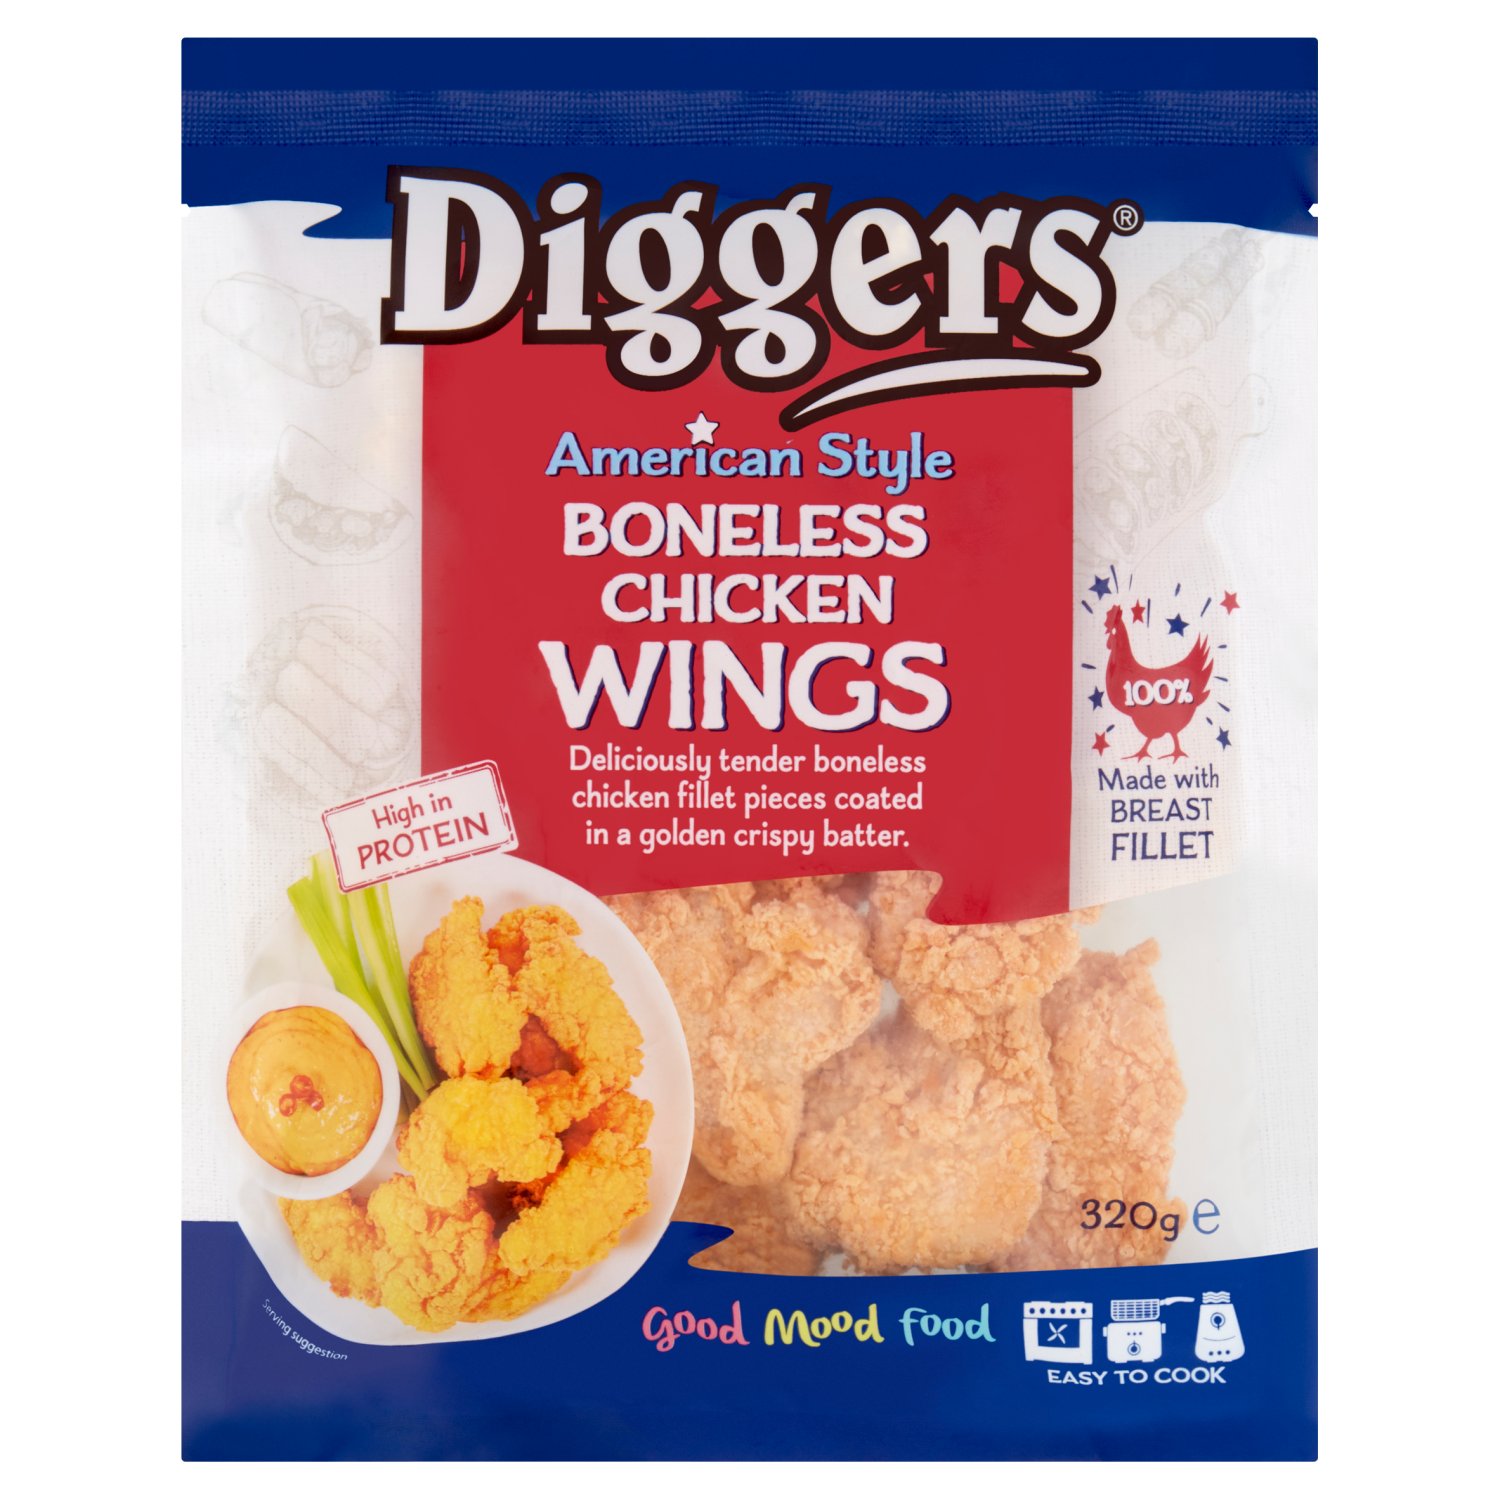 Diggers American Style Boneless Chicken Wings 320g